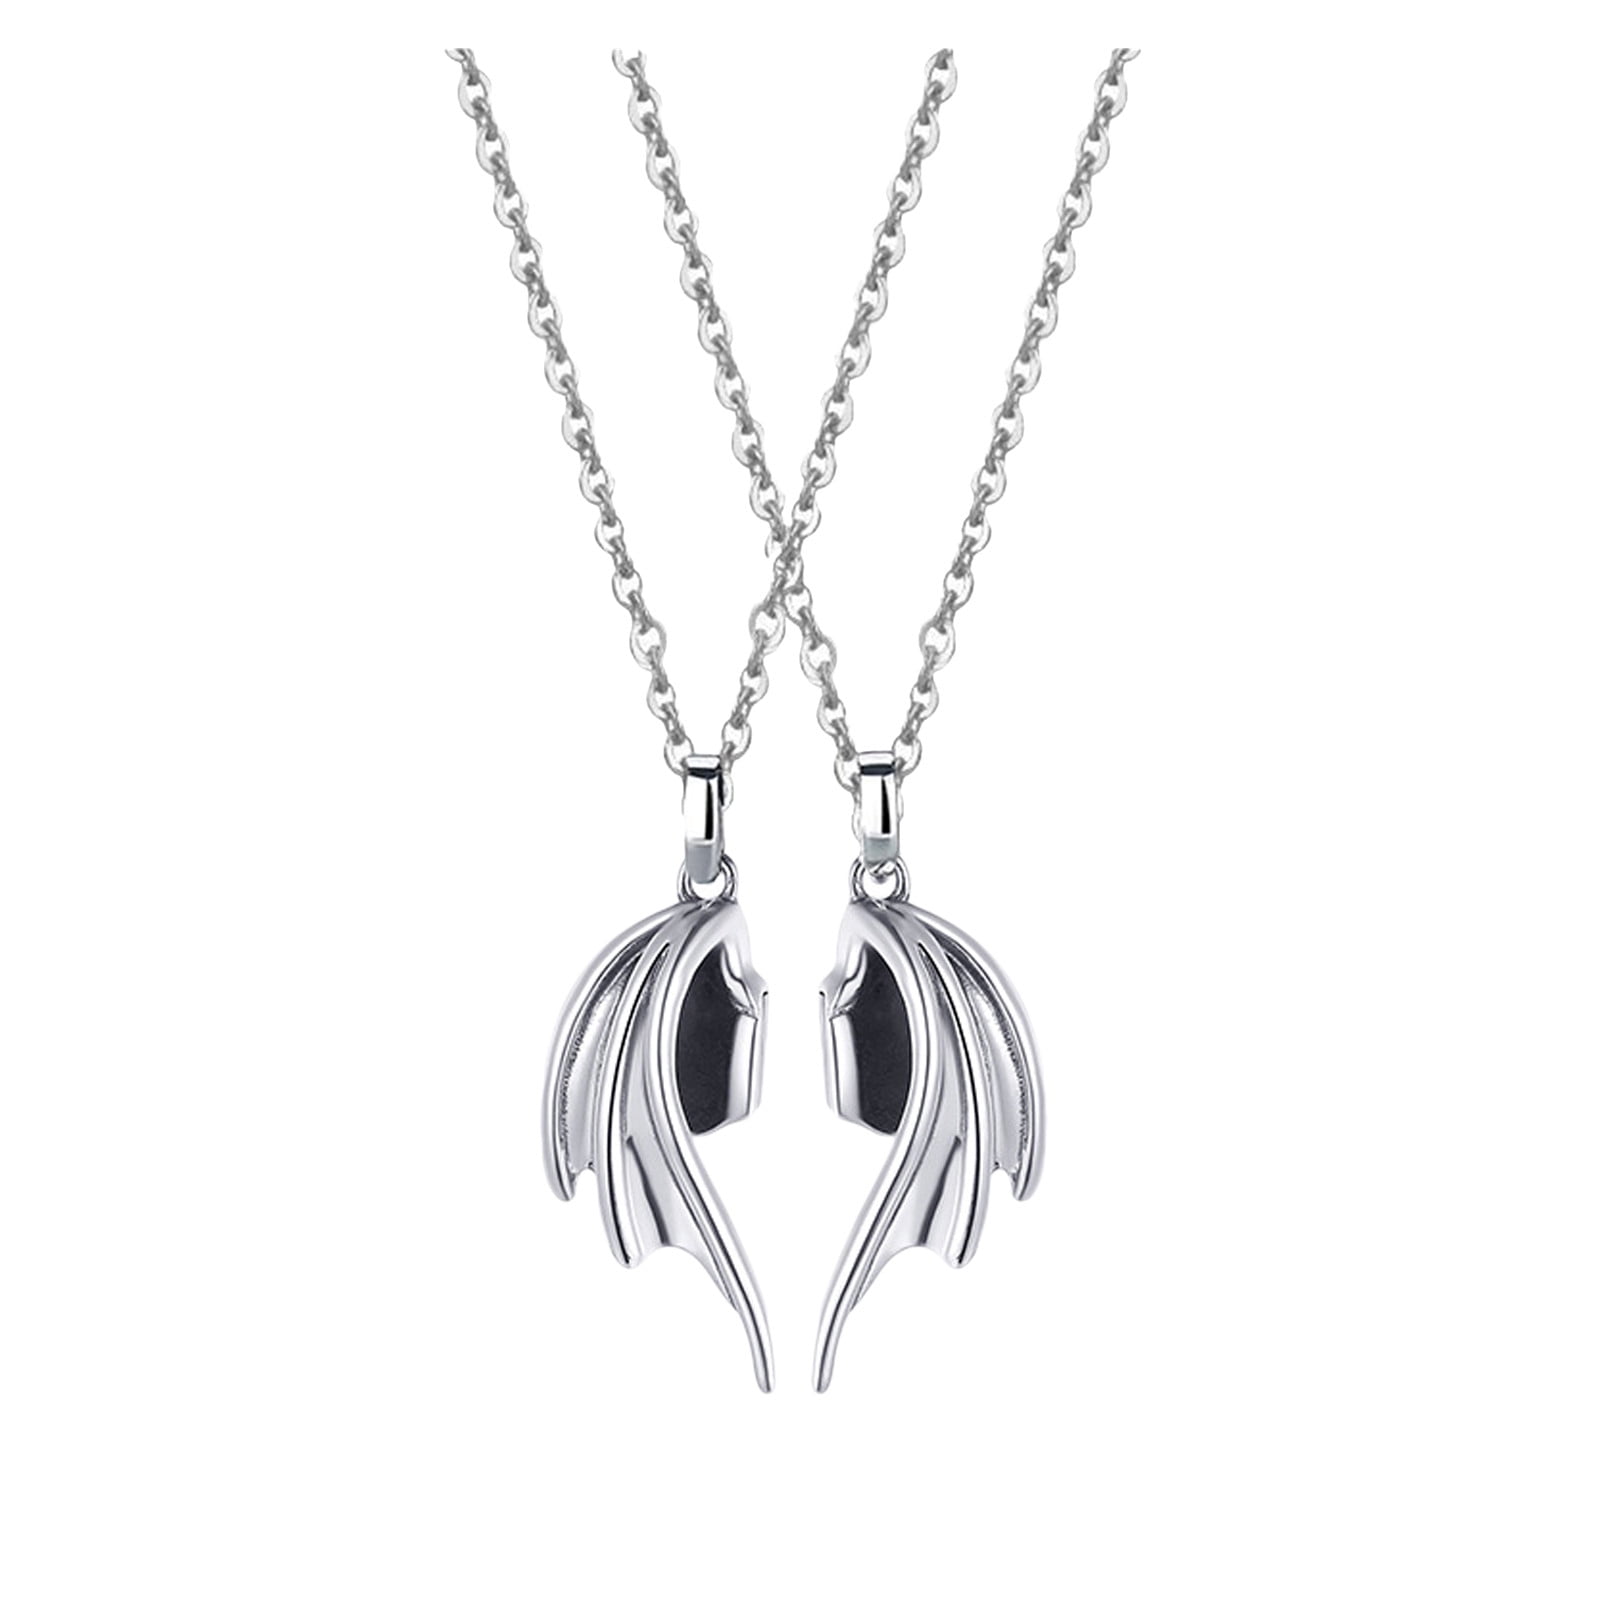 Buy Silver-Toned Necklaces & Pendants for Women by VEMBLEY Online | Ajio.com